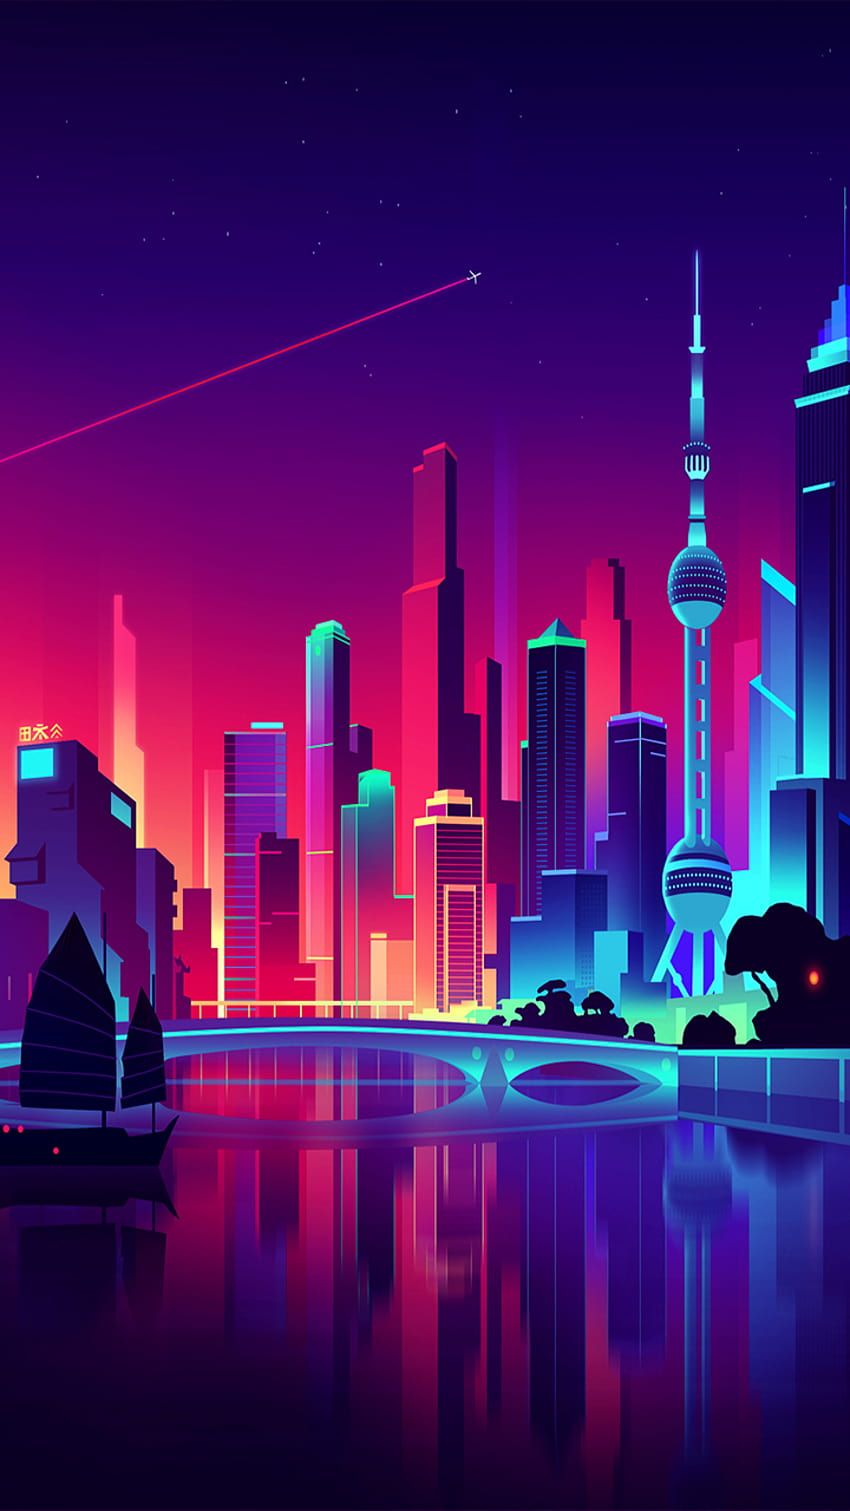 IPhone wallpaper for iOS 11, 1080x1920, 2018, neon, night, Shanghai, The Bund, vector - Cyberpunk